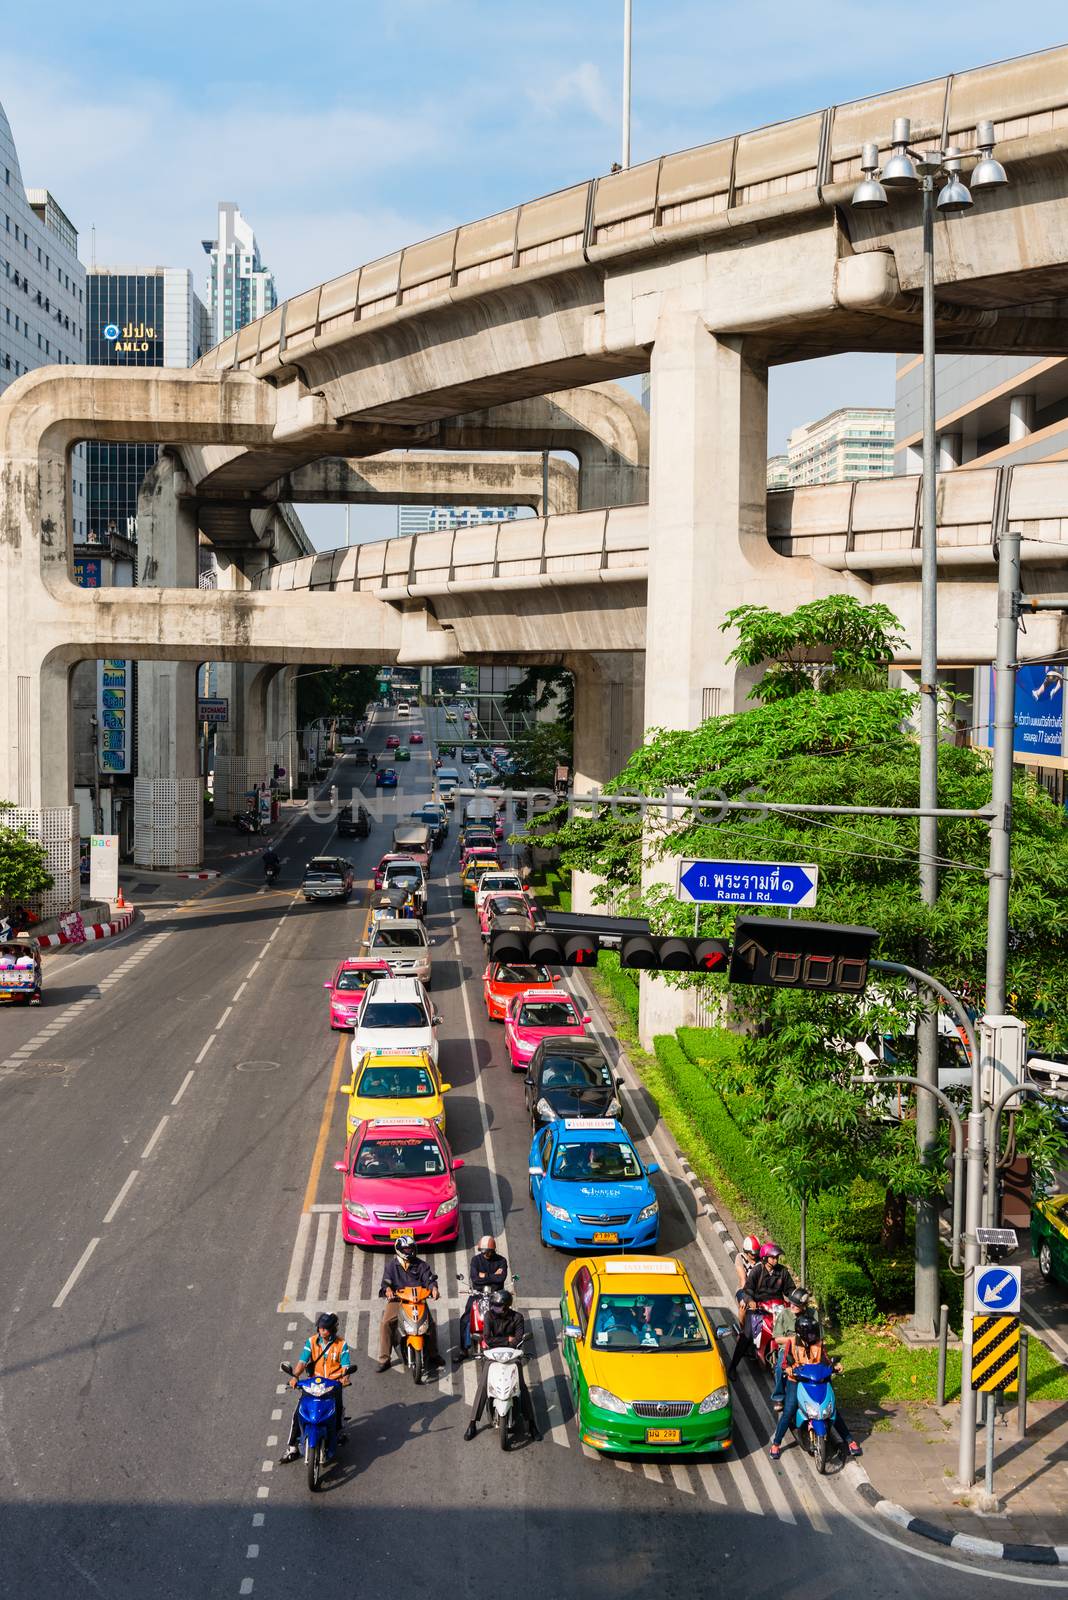 Multilevel Bangkok with traffic on street and SkyTrain tracks by iryna_rasko